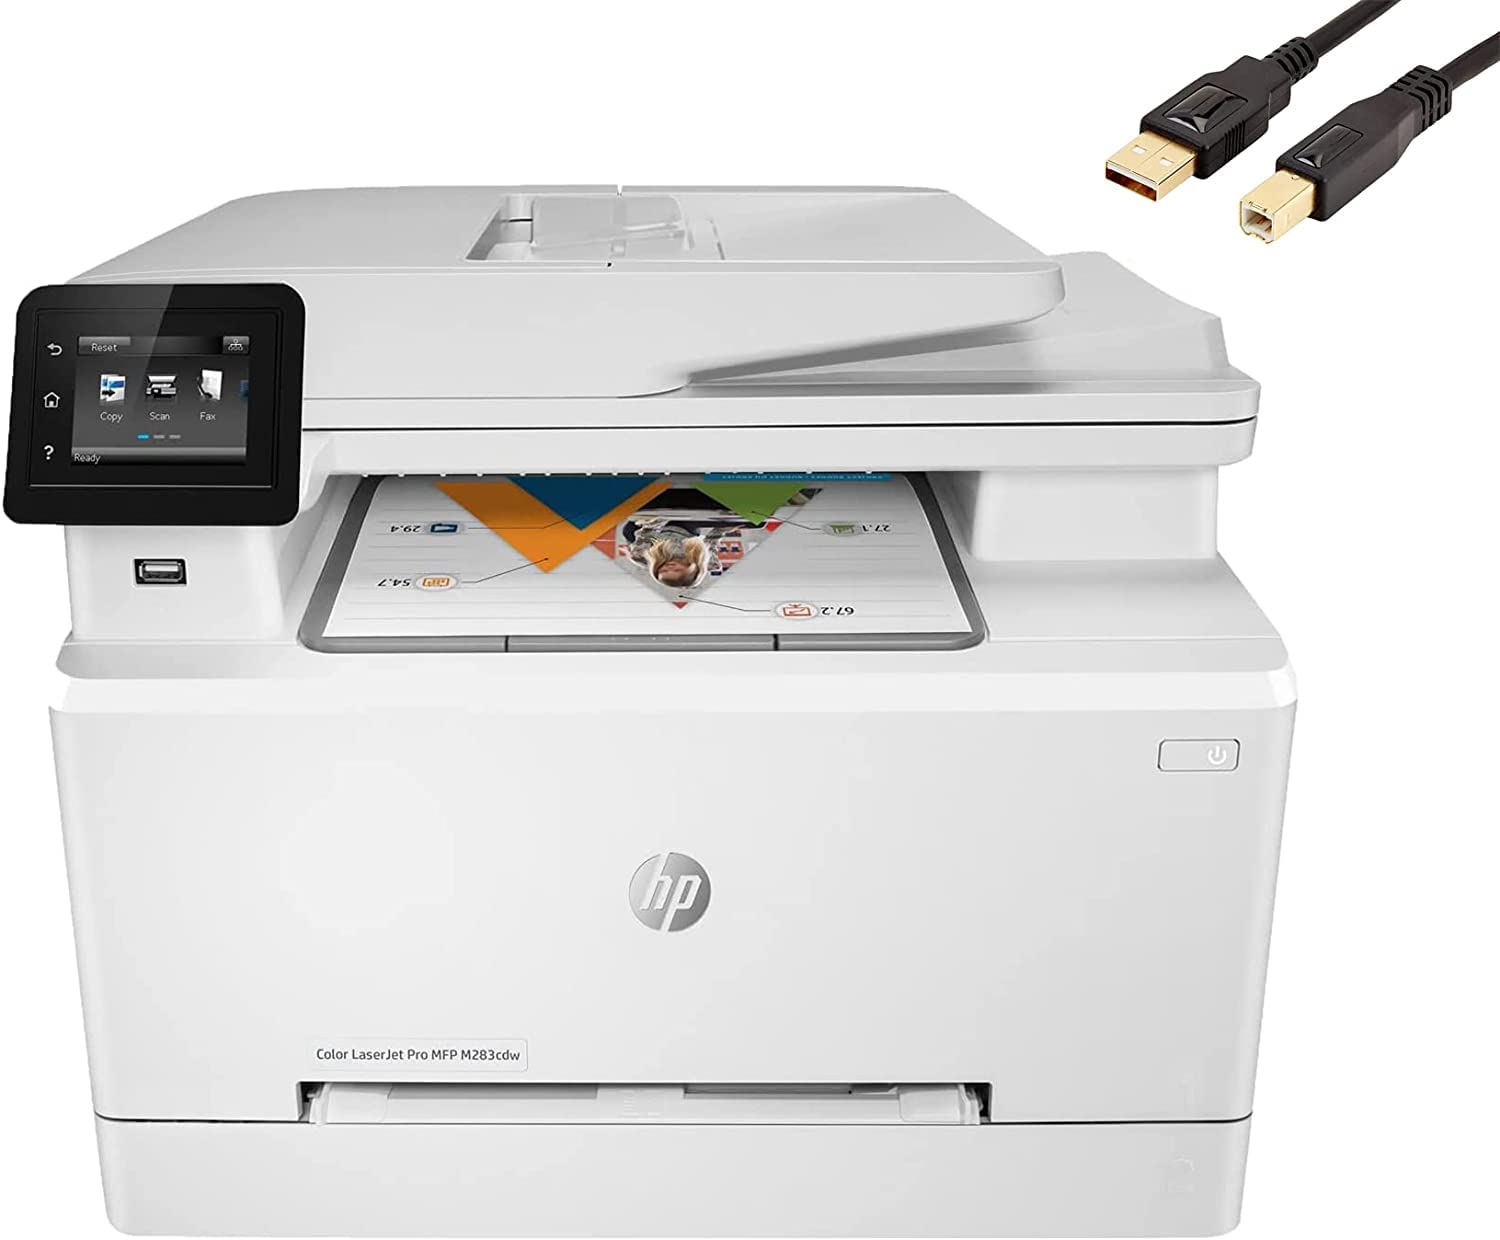  HP Color Laserjet Pro M283cdw ワイヤレスオールインワンレーザープリンター、260 枚、22ppm、600x600DPI、自動両面印刷、リモートモバイル印刷、プリントスキ...